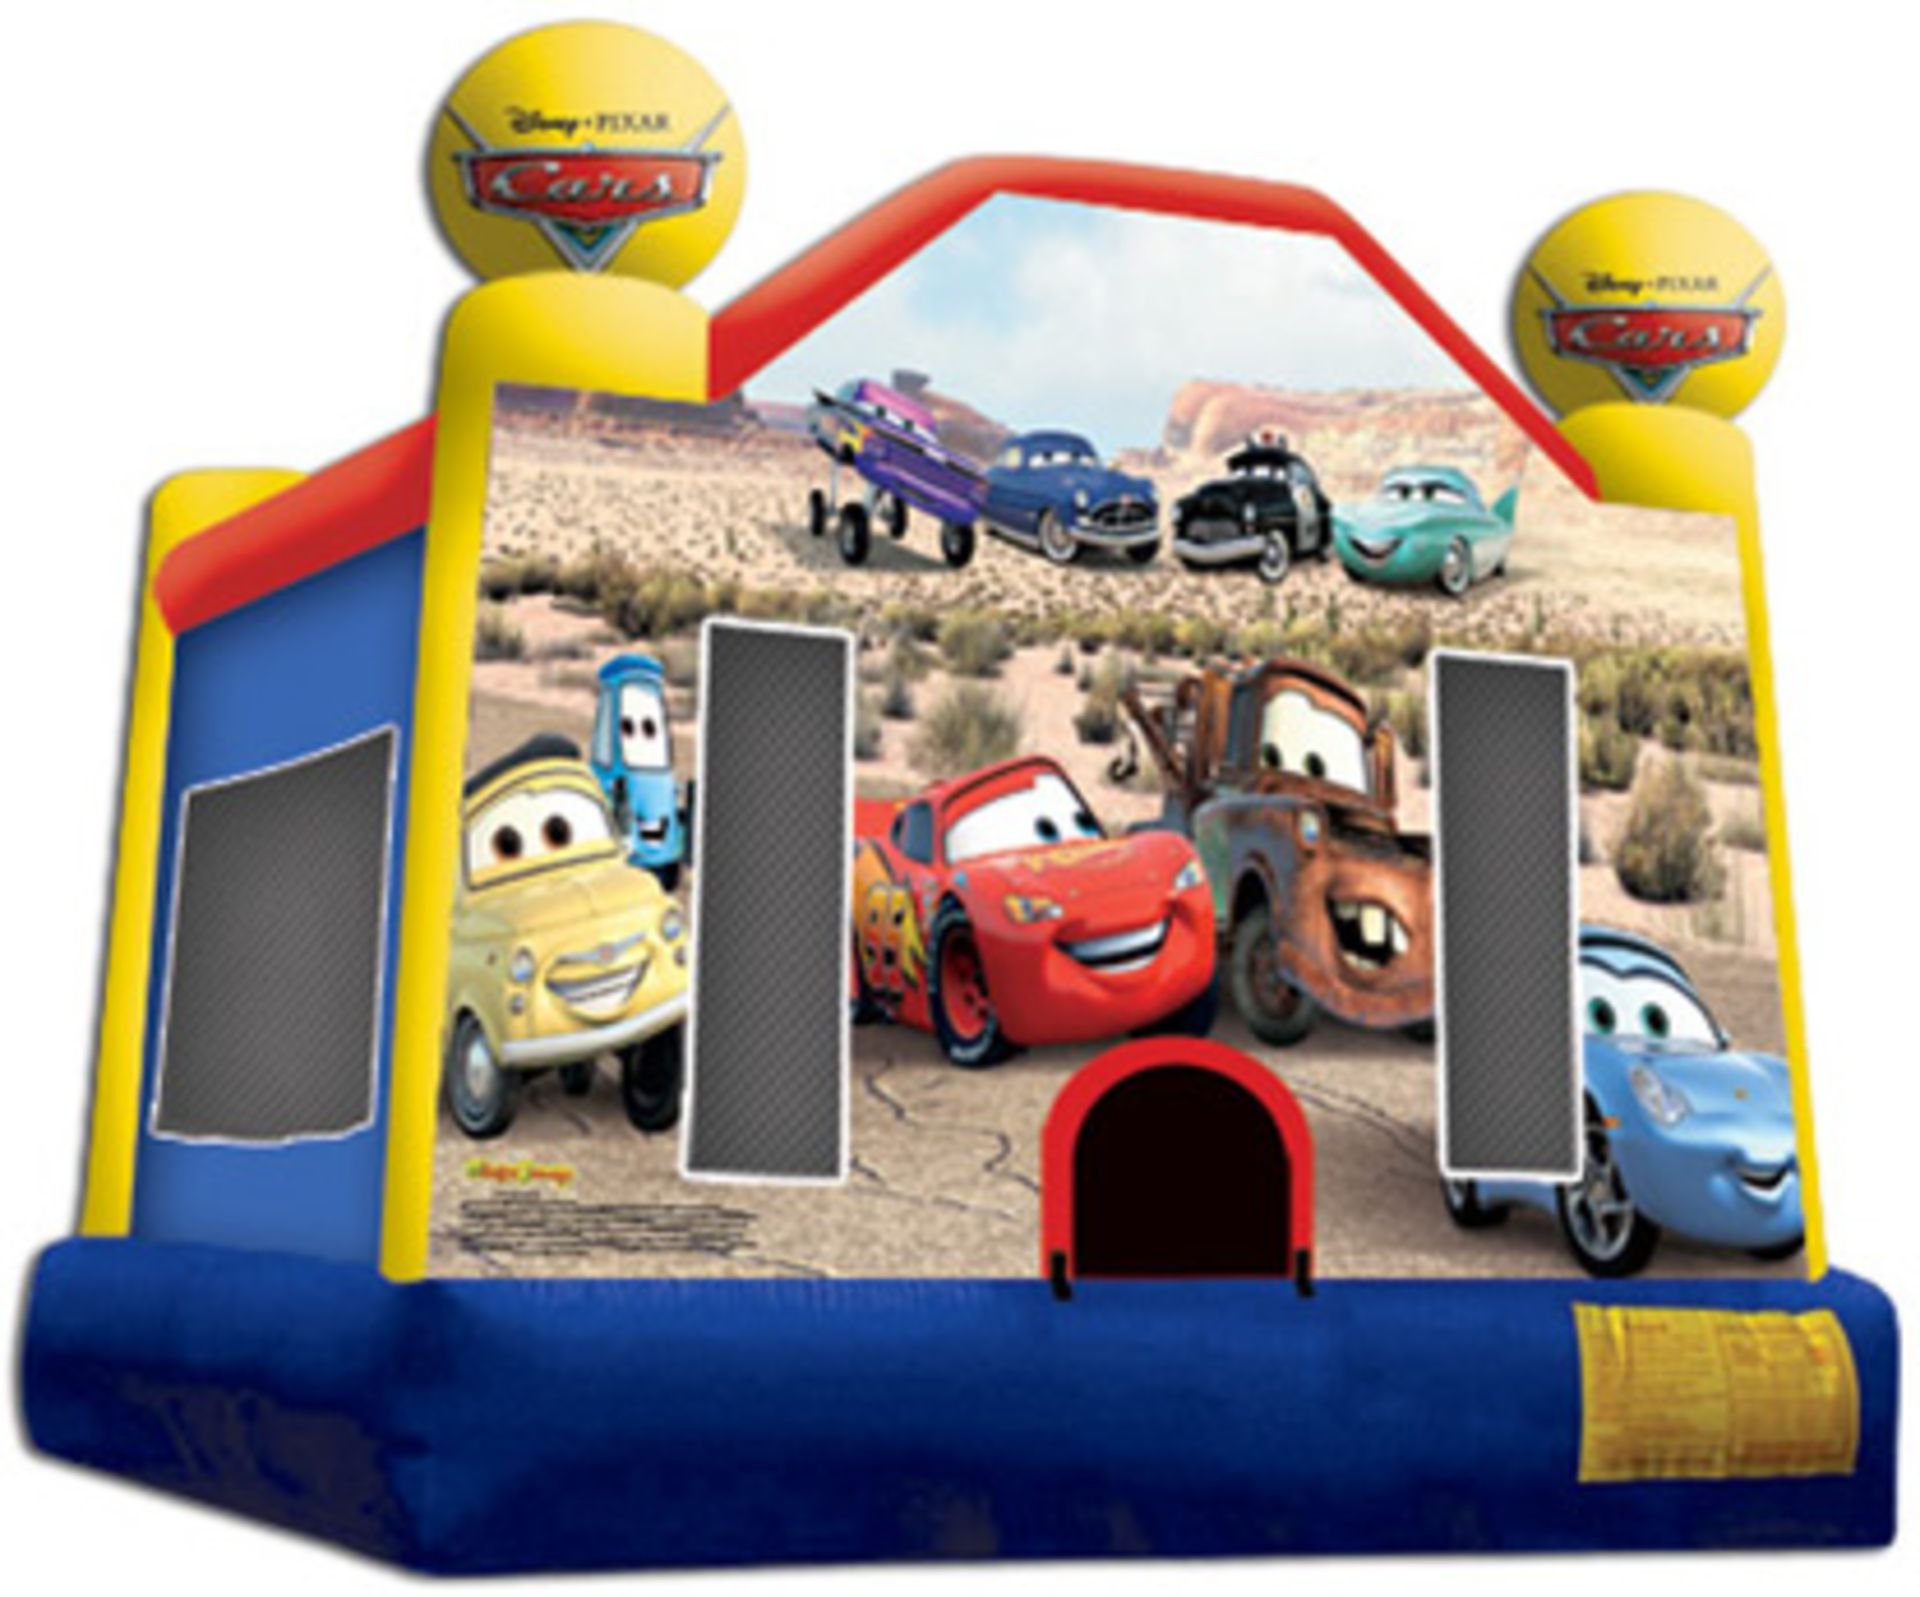 Disney Cars Jumper, 14' x 13' x 12' - Image 2 of 2